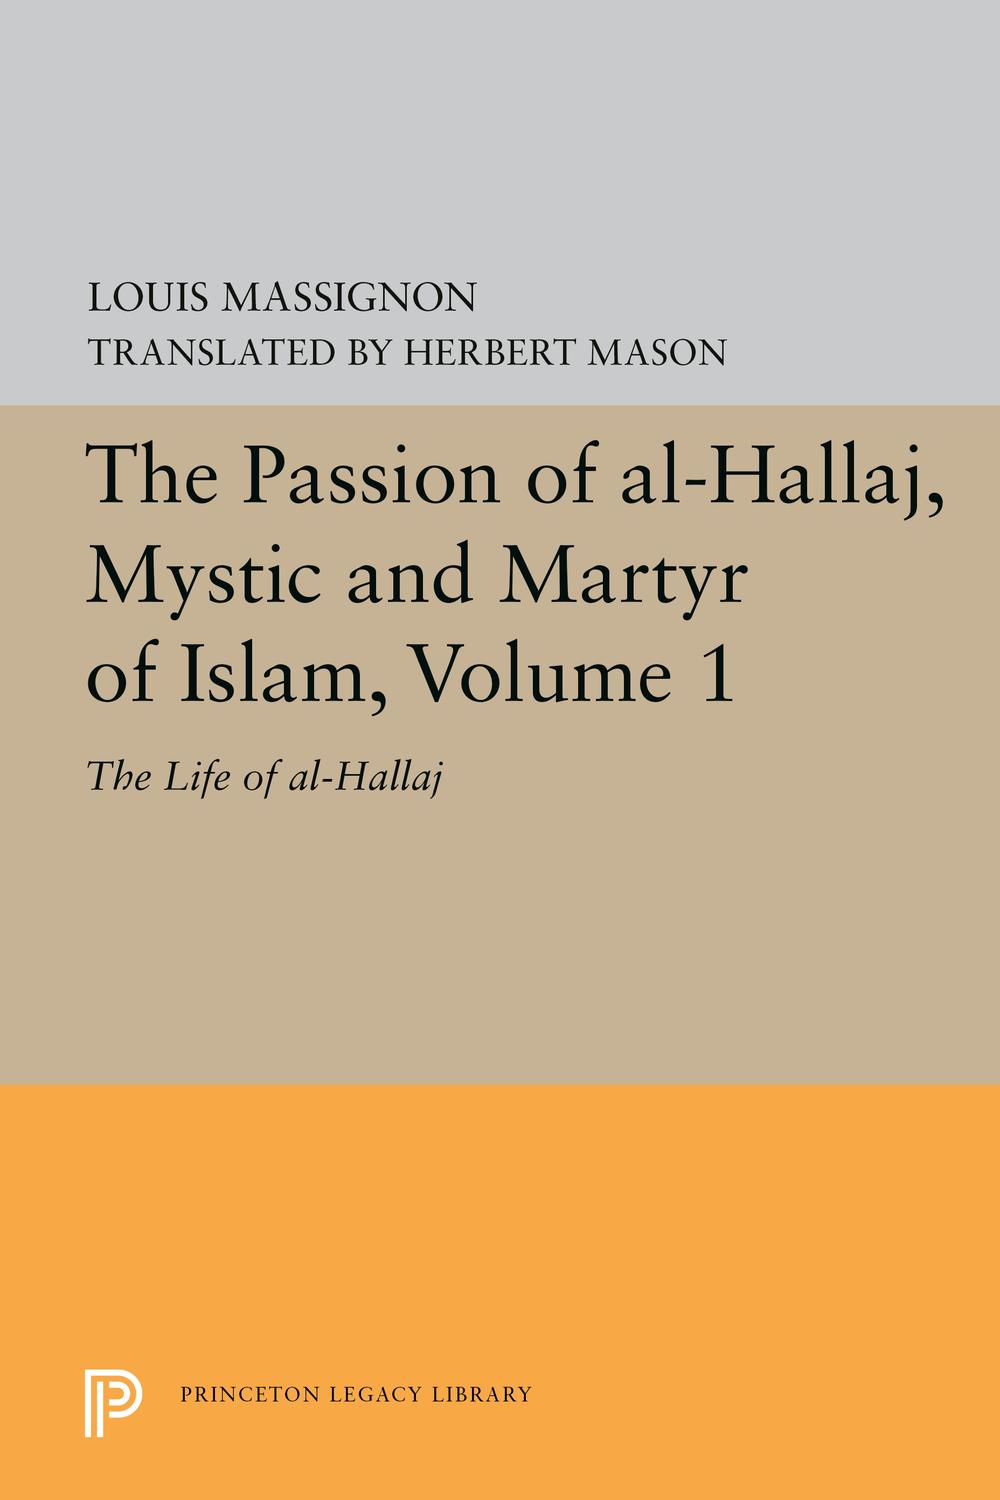 The Passion of Al-Hallaj, Mystic and Martyr of Islam, Volume 1 - Louis Massignon, Herbert Mason